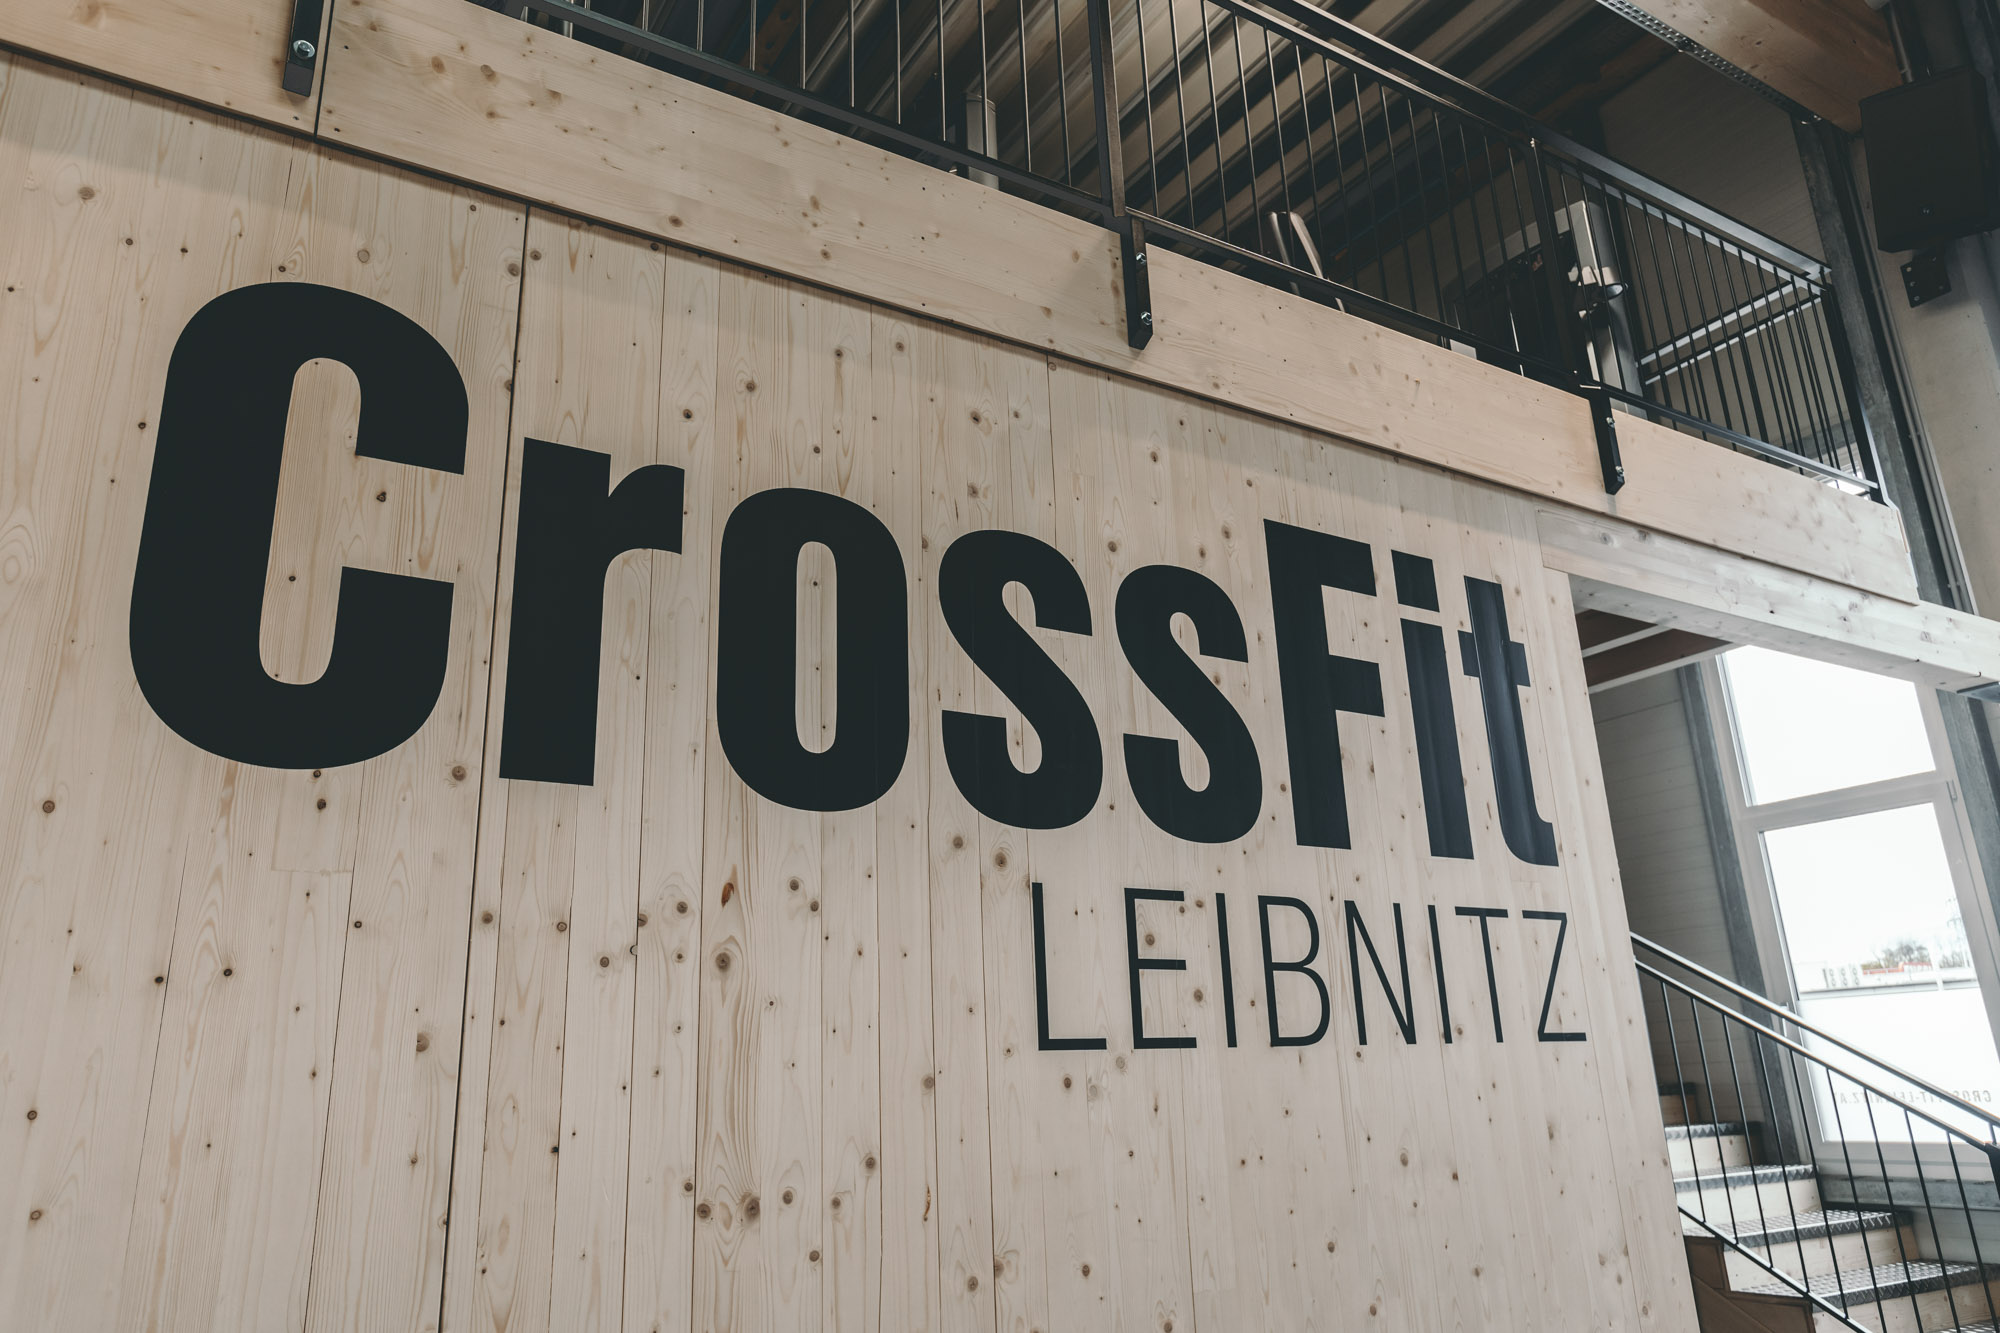 CrossFit Leibnitz Wortmarke auf Wand